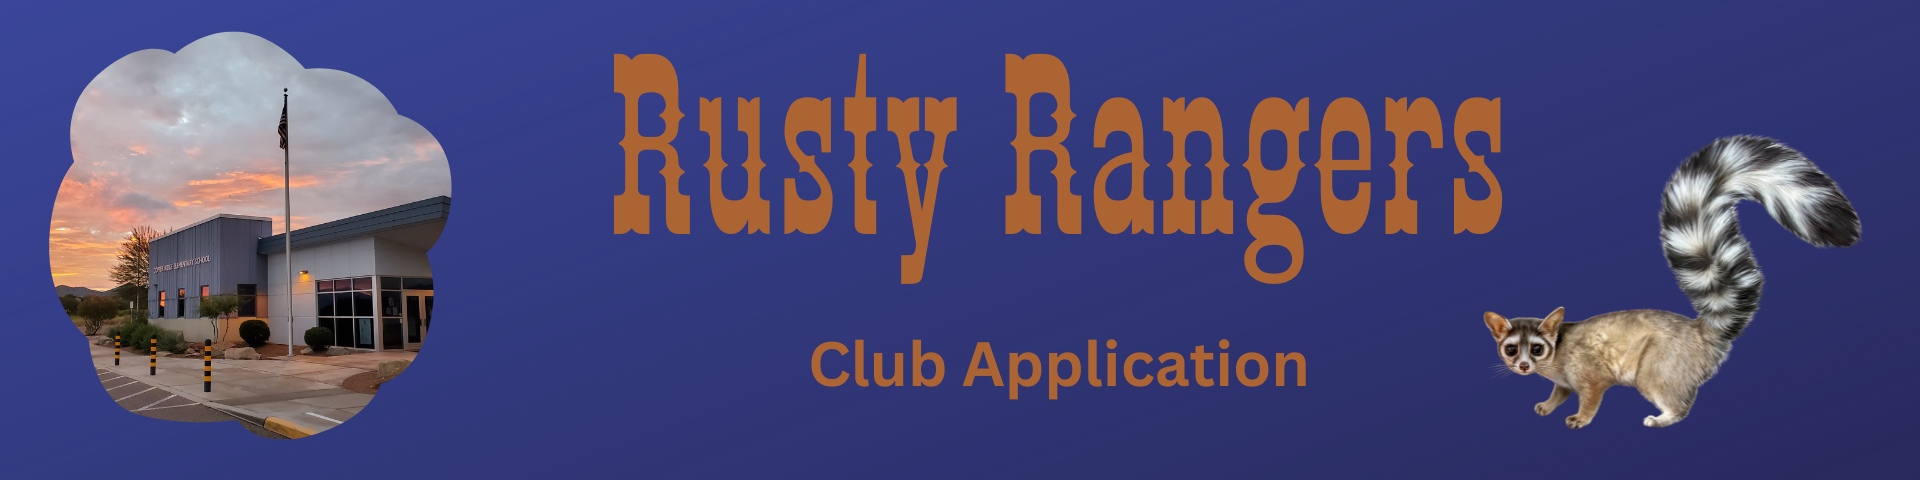 Rusty Rangers Club Application